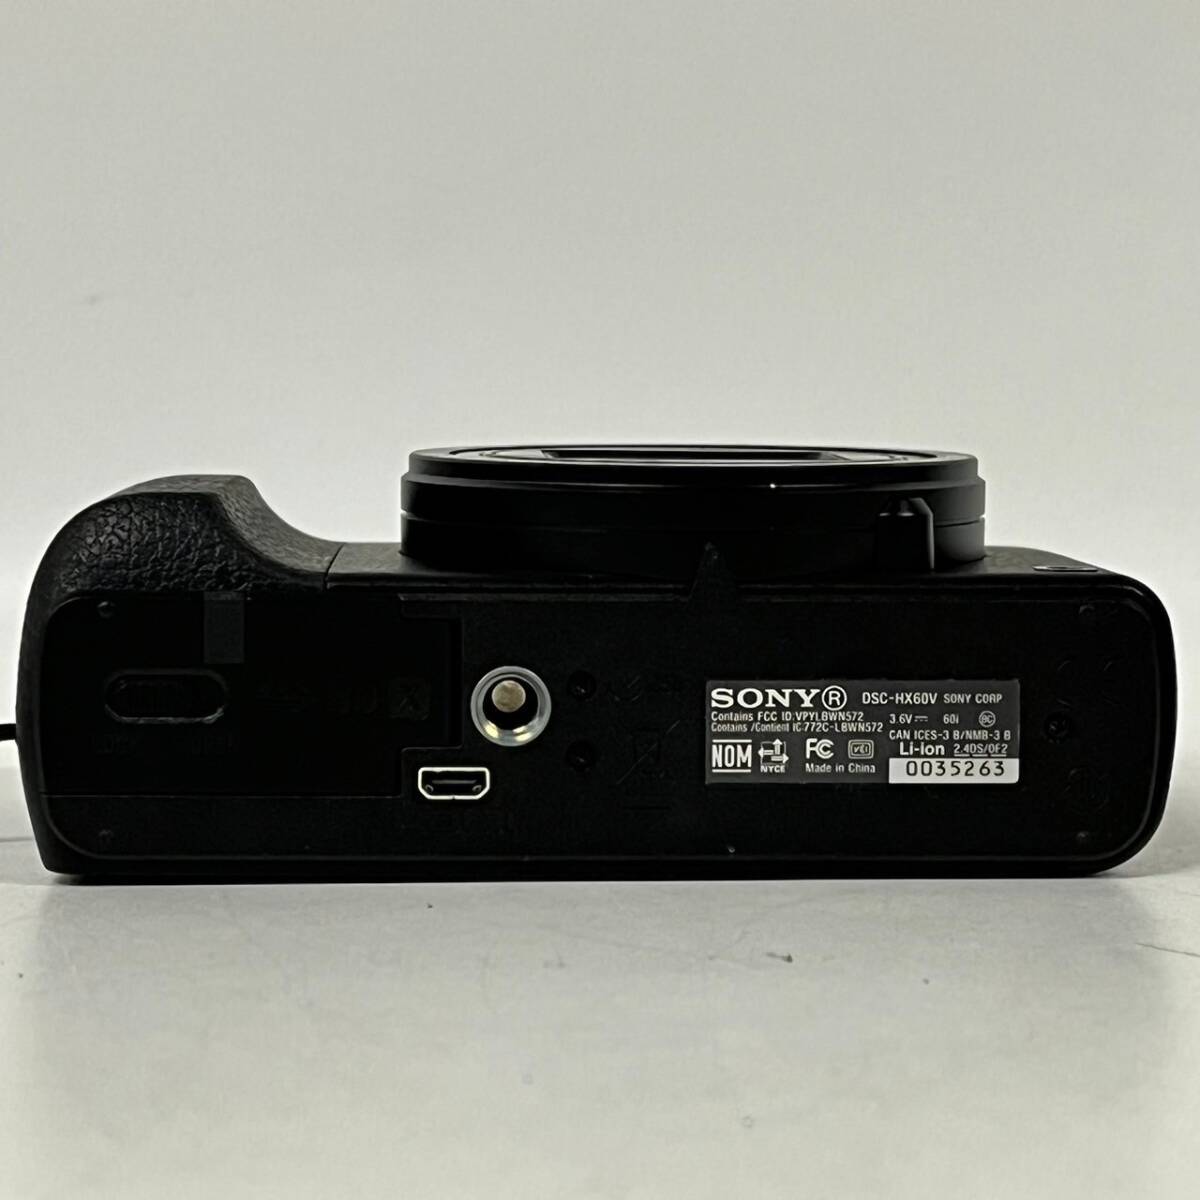 1 jpy ~[ operation not yet verification ] Sony SONY Cyber-shot DSC-HX60V Lens G 30× Optical Zoom 3.5-6.3/4.3-129 compact digital camera G180516